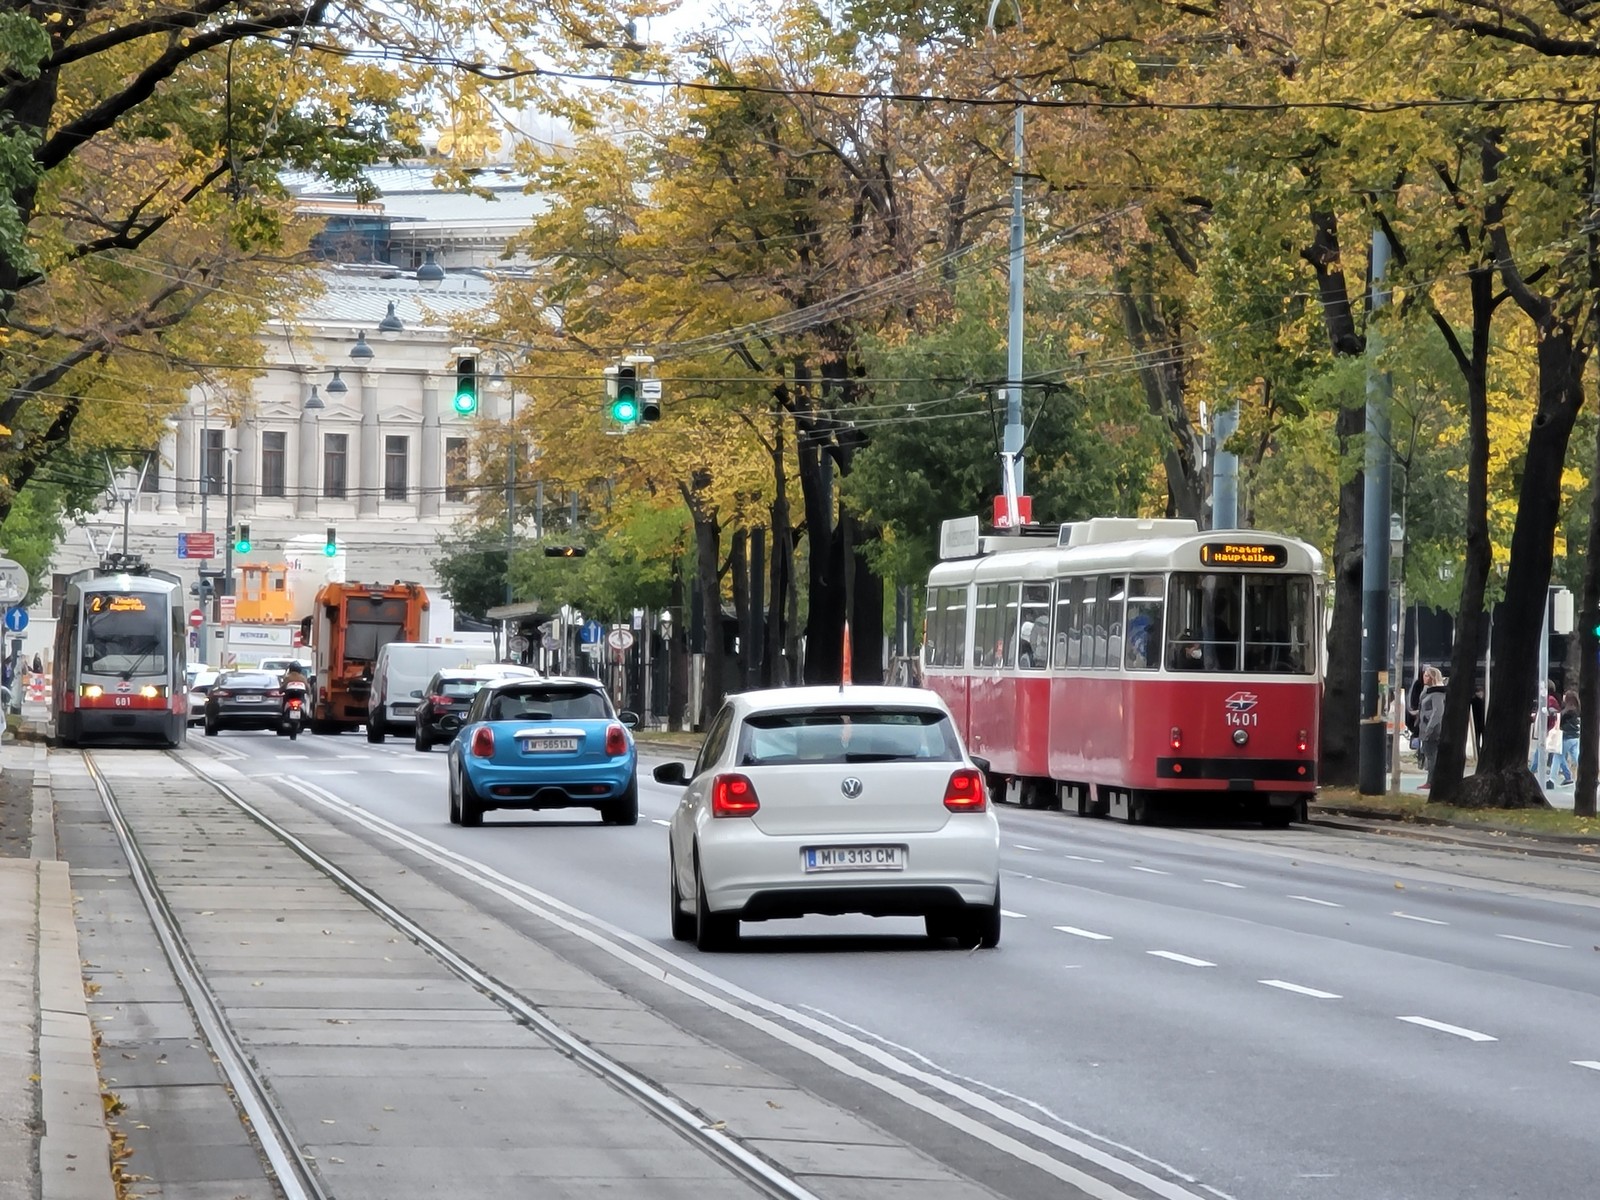 Трамвай в Вене